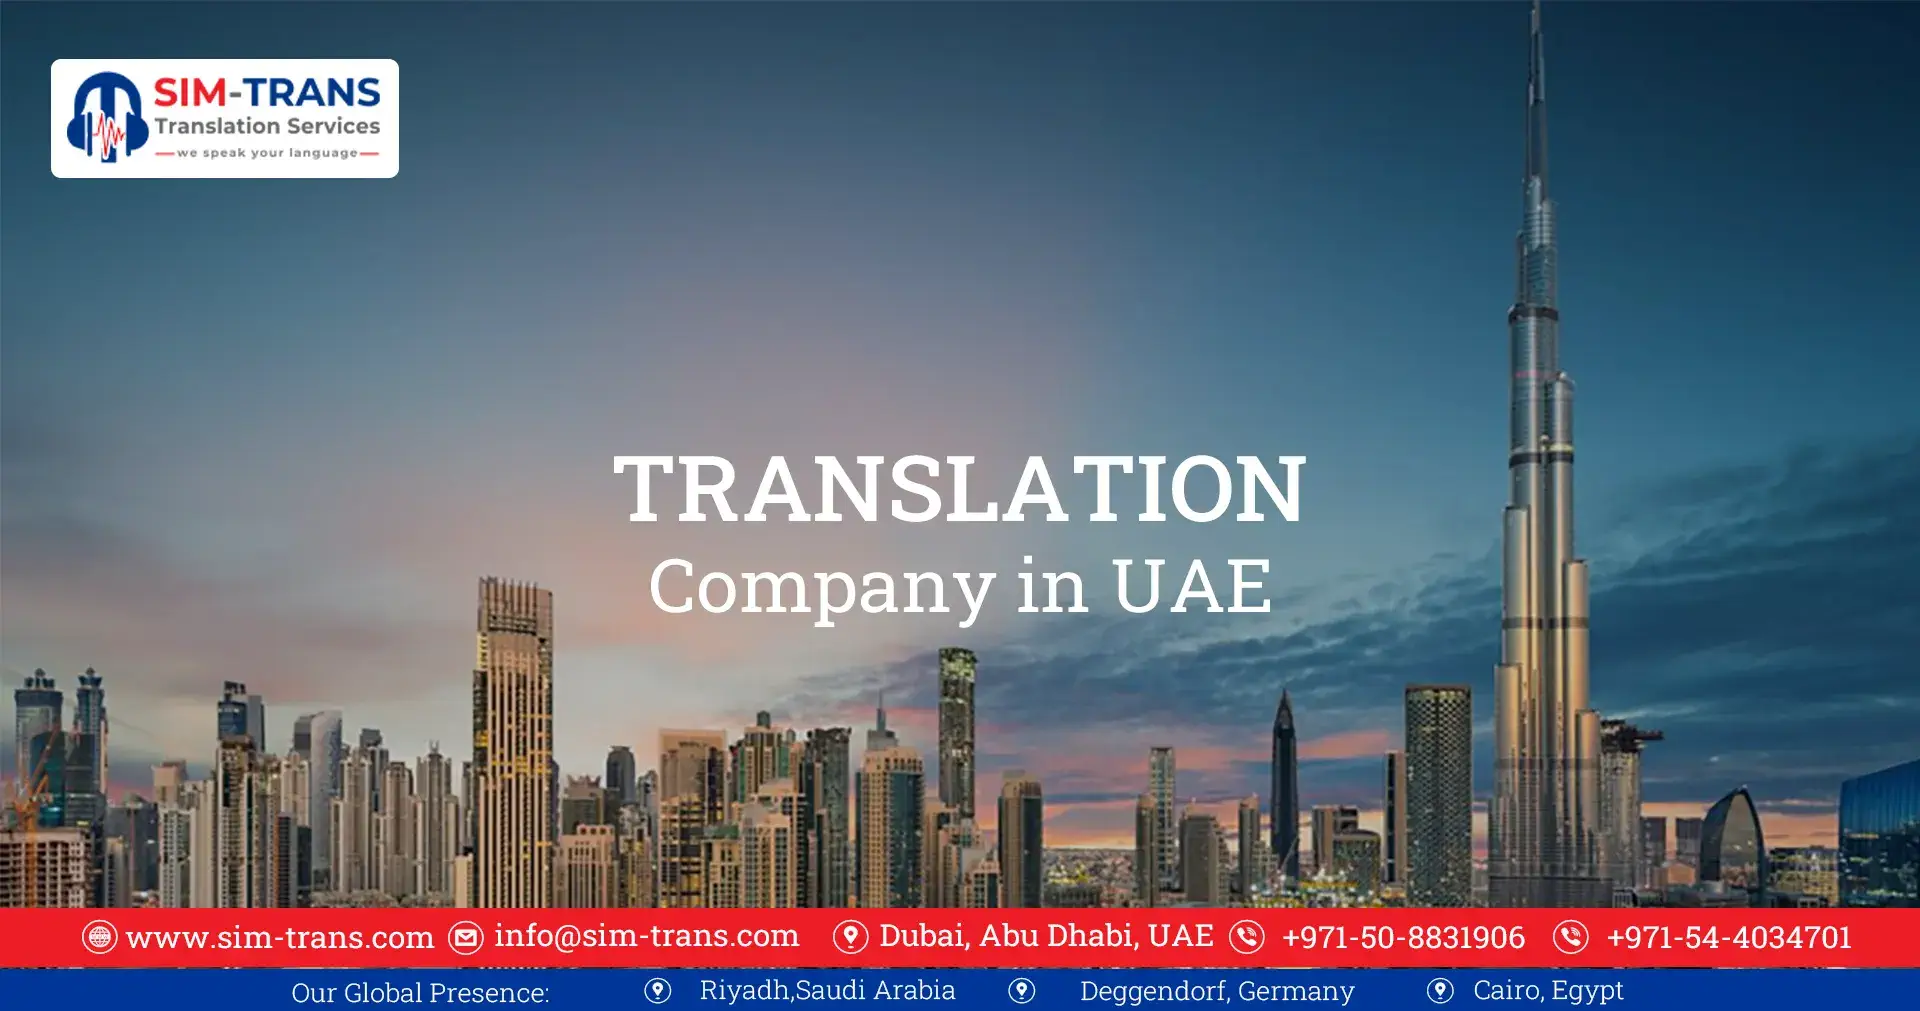 Sim-Trans: Revolutionizing Translation Company in Dubai